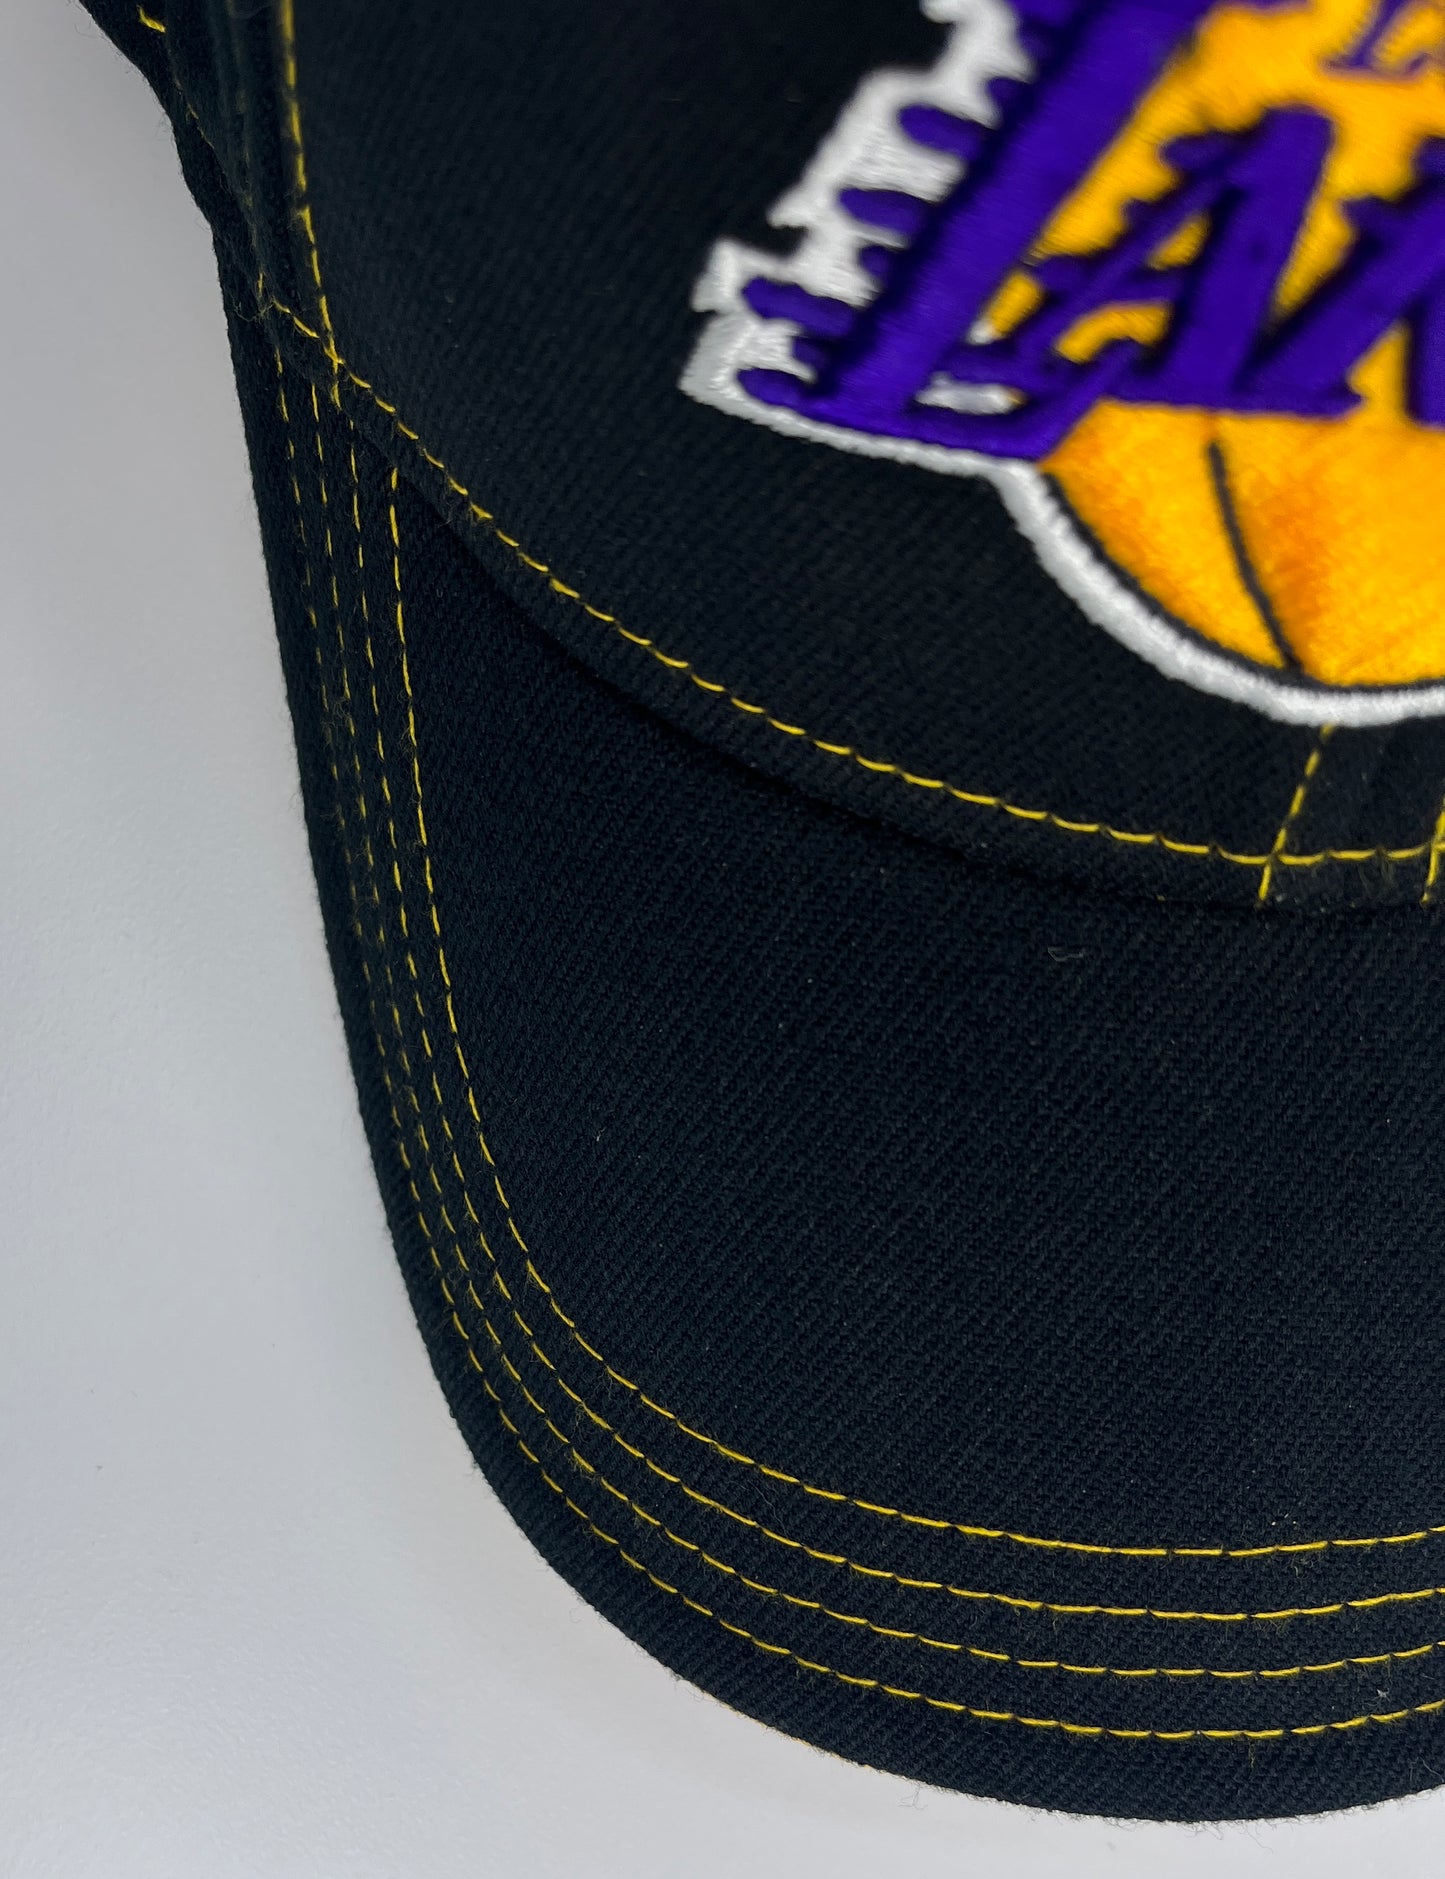 Baseball Cap NBA Lakers Black, Purple, Yellow Size L/ XL SKU 000427